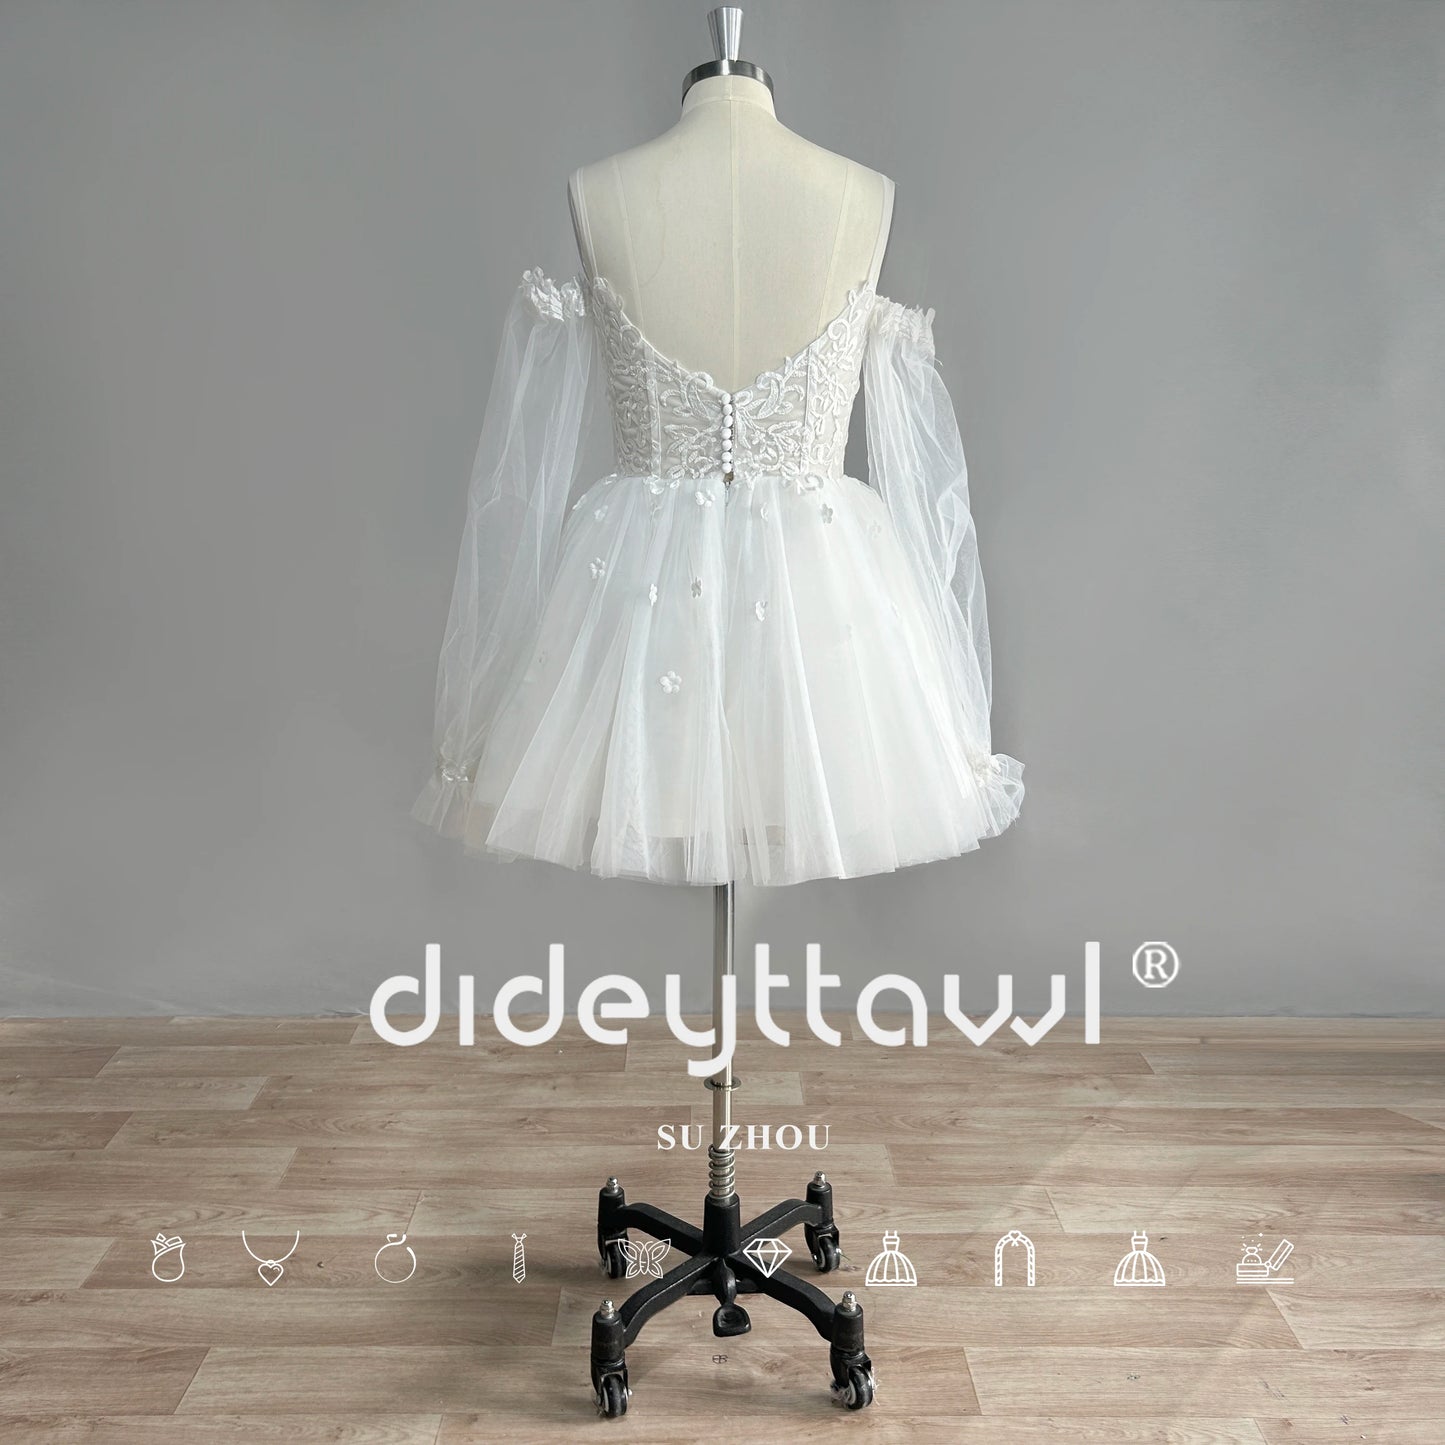 Dideyttawl מתוקה שרוולים ארוכים טול שמלת כלה קצרה אורך מיני מעל שמלת כלה כתף תמונה אמיתית